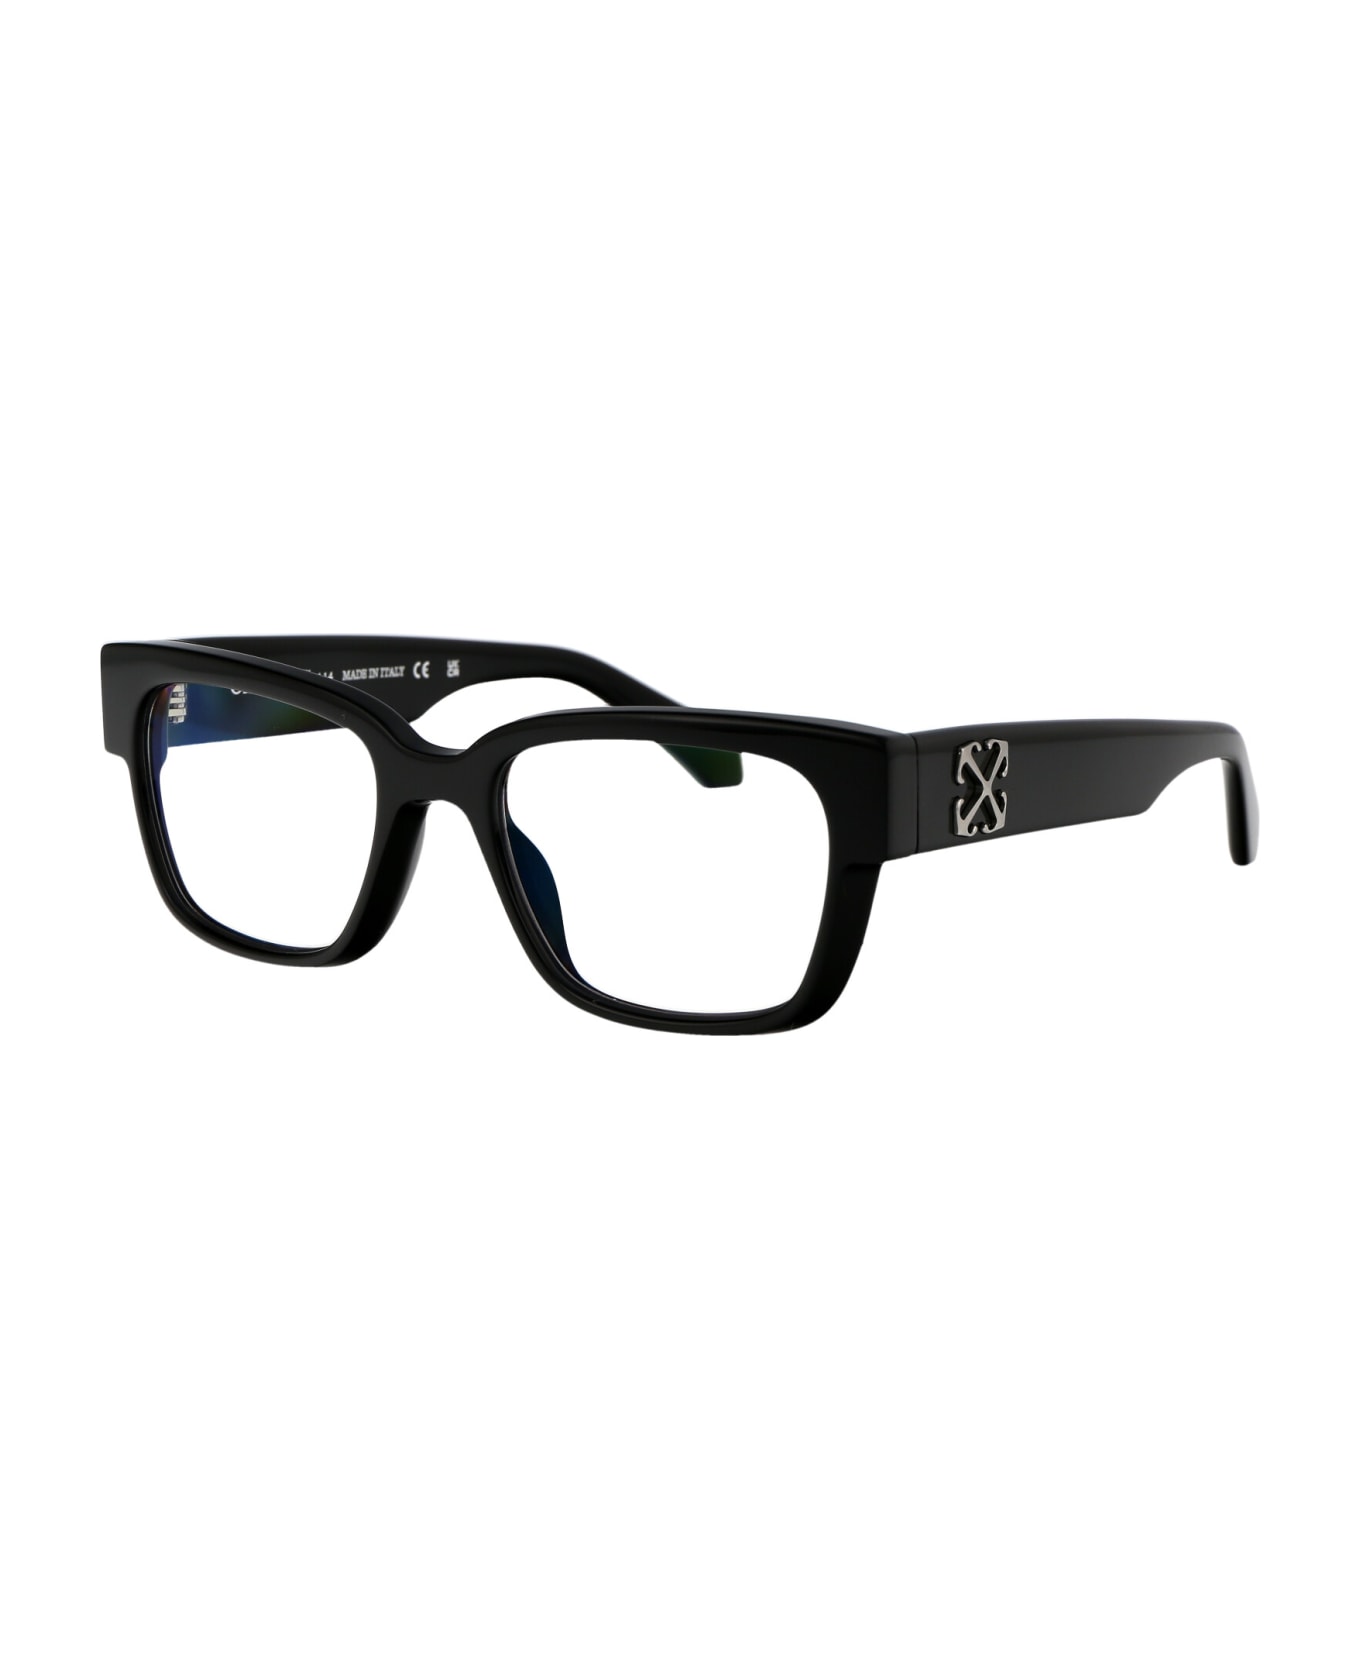 Off-White Optical Style 59 Glasses - 1000 BLACK